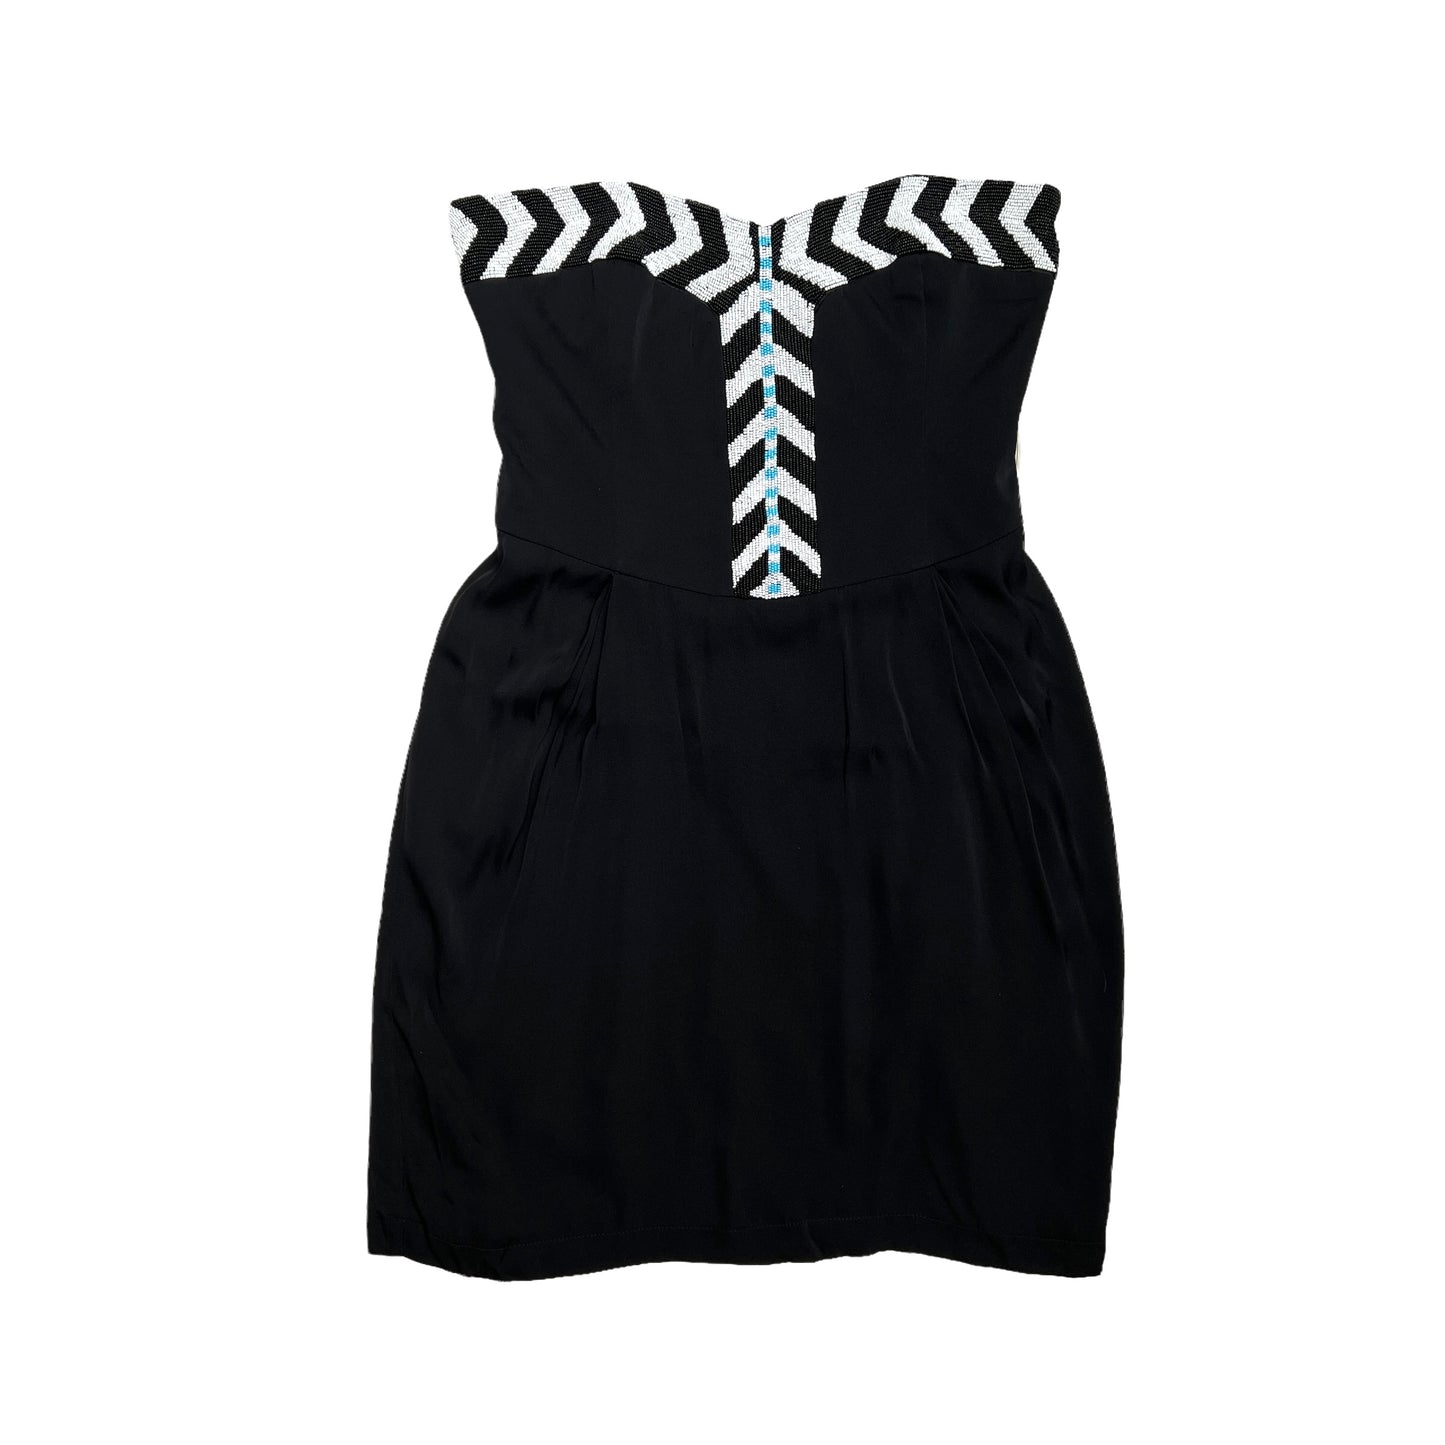 Vintage Black Dress - XS